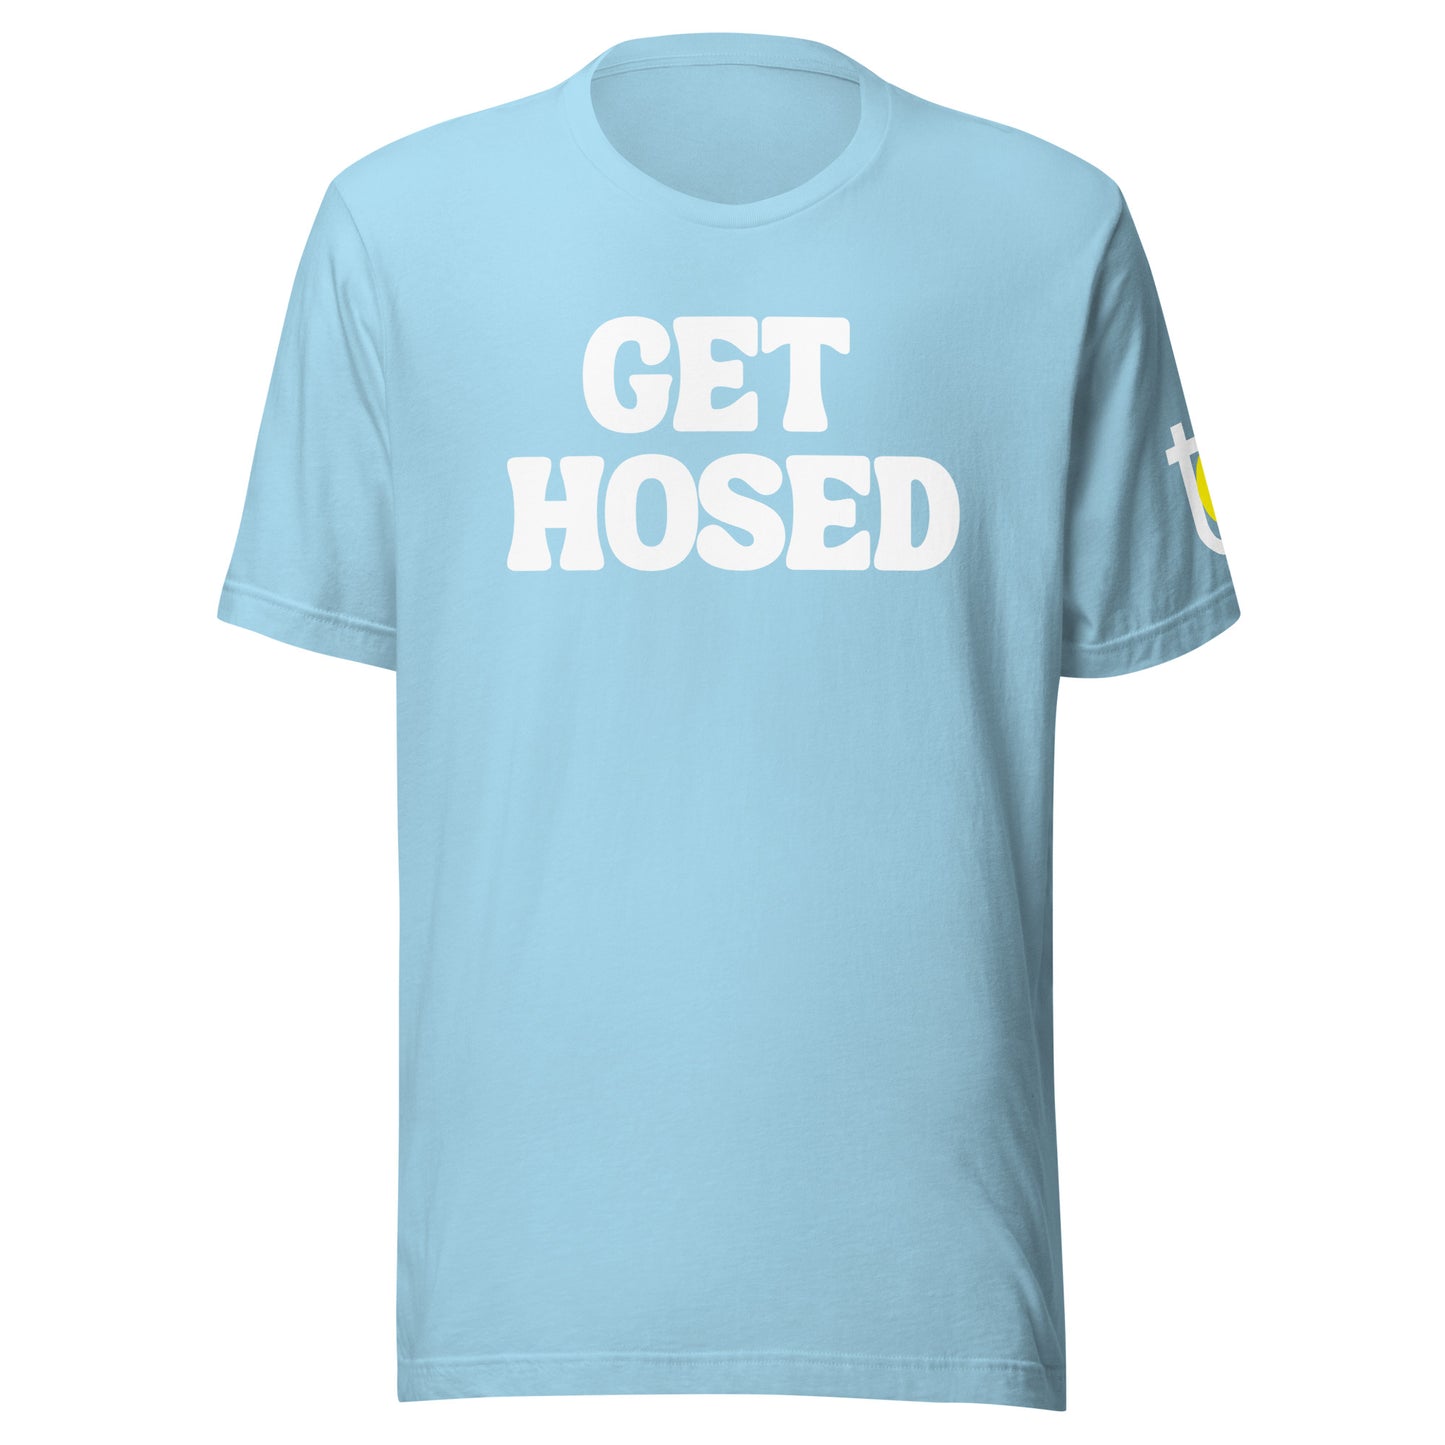 The GET HOSED Unisex T-Shirt